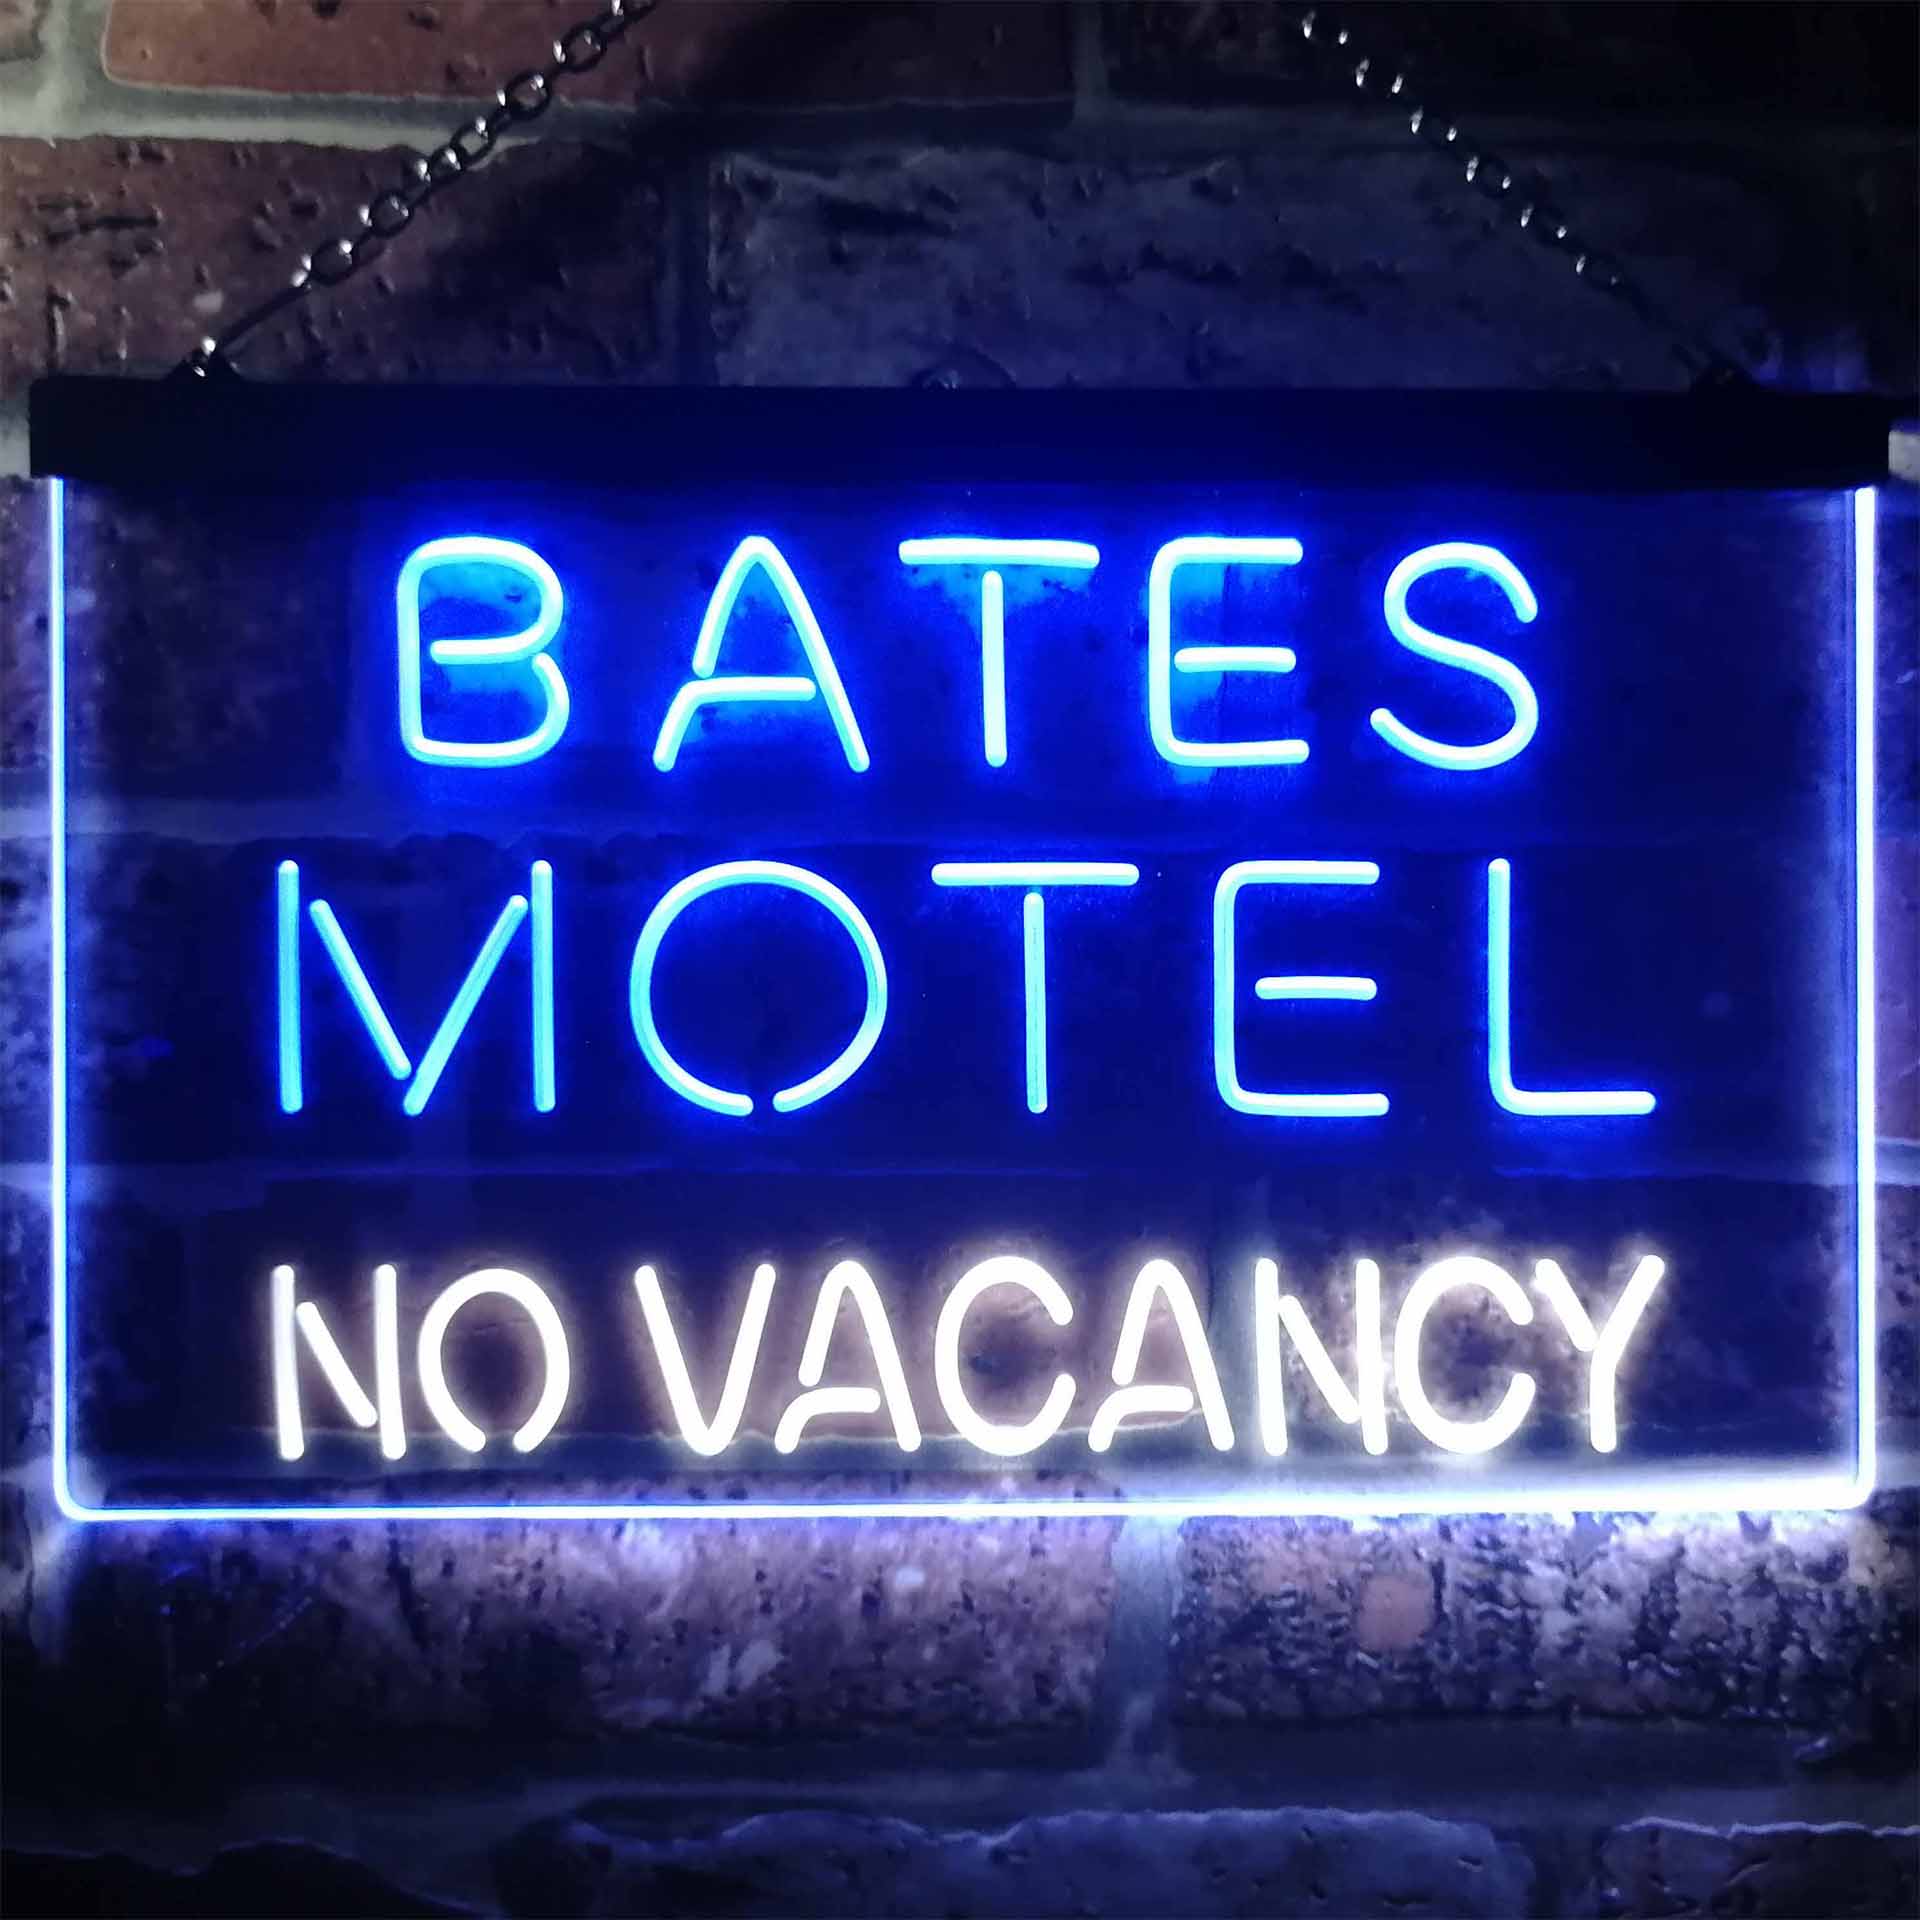 Bates Motel No Vacancy Dual Color LED Neon Sign ProLedSign